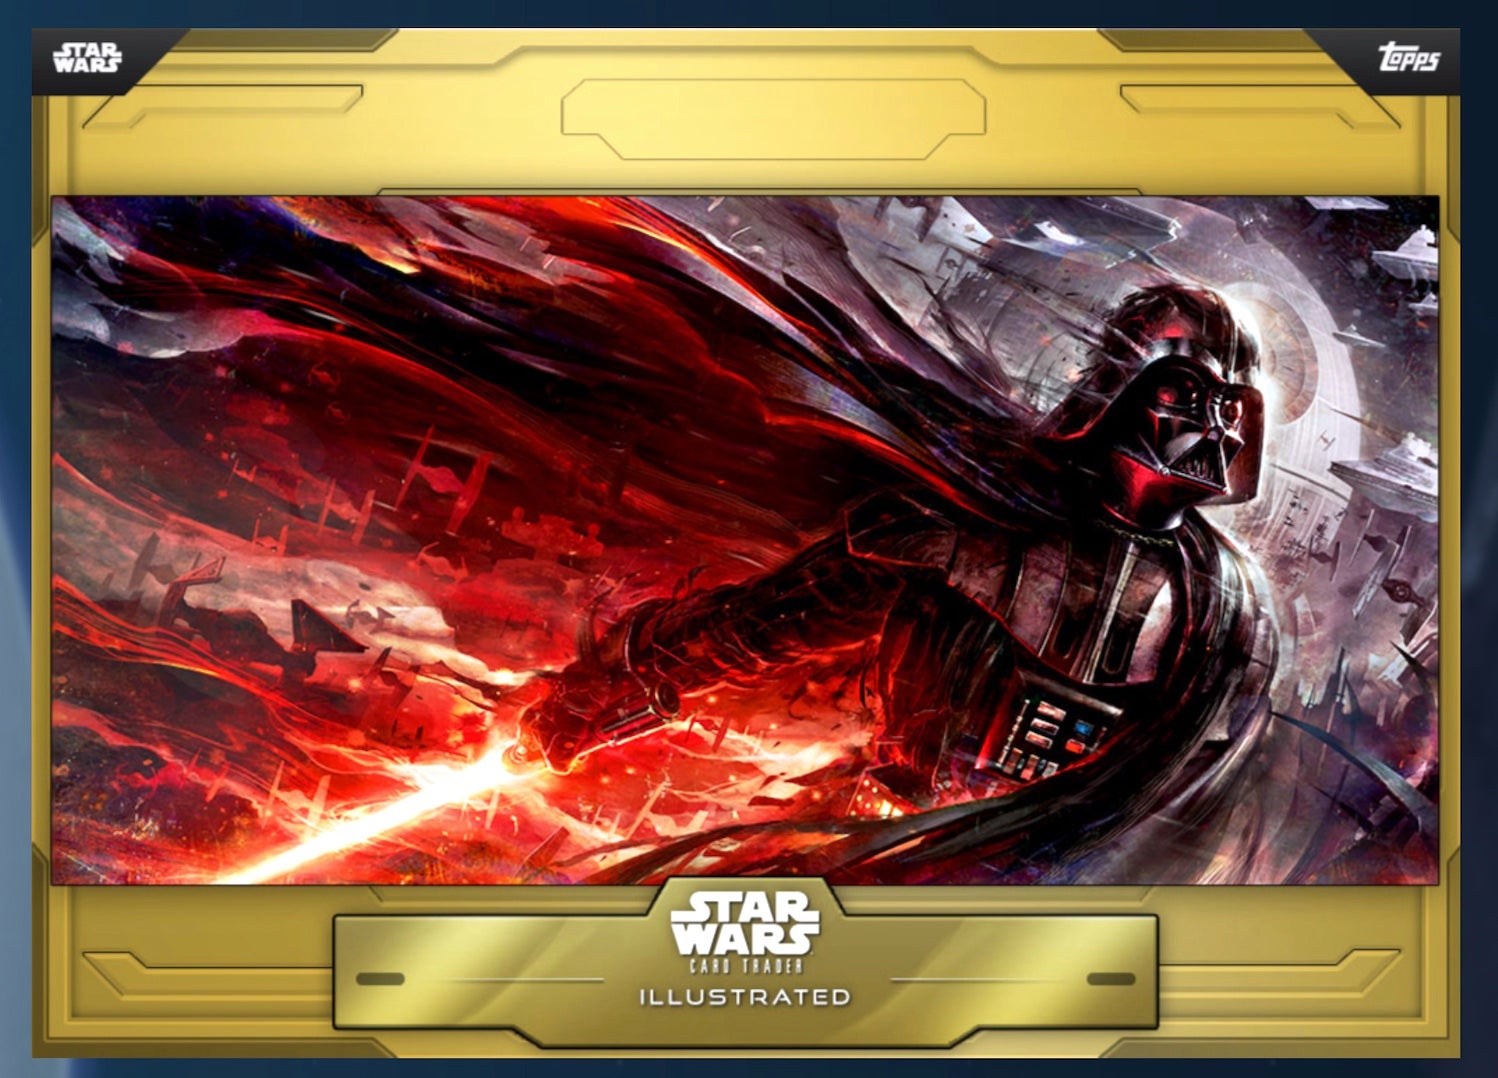 Darth Vader on a new CTI card. (Image: Topps)